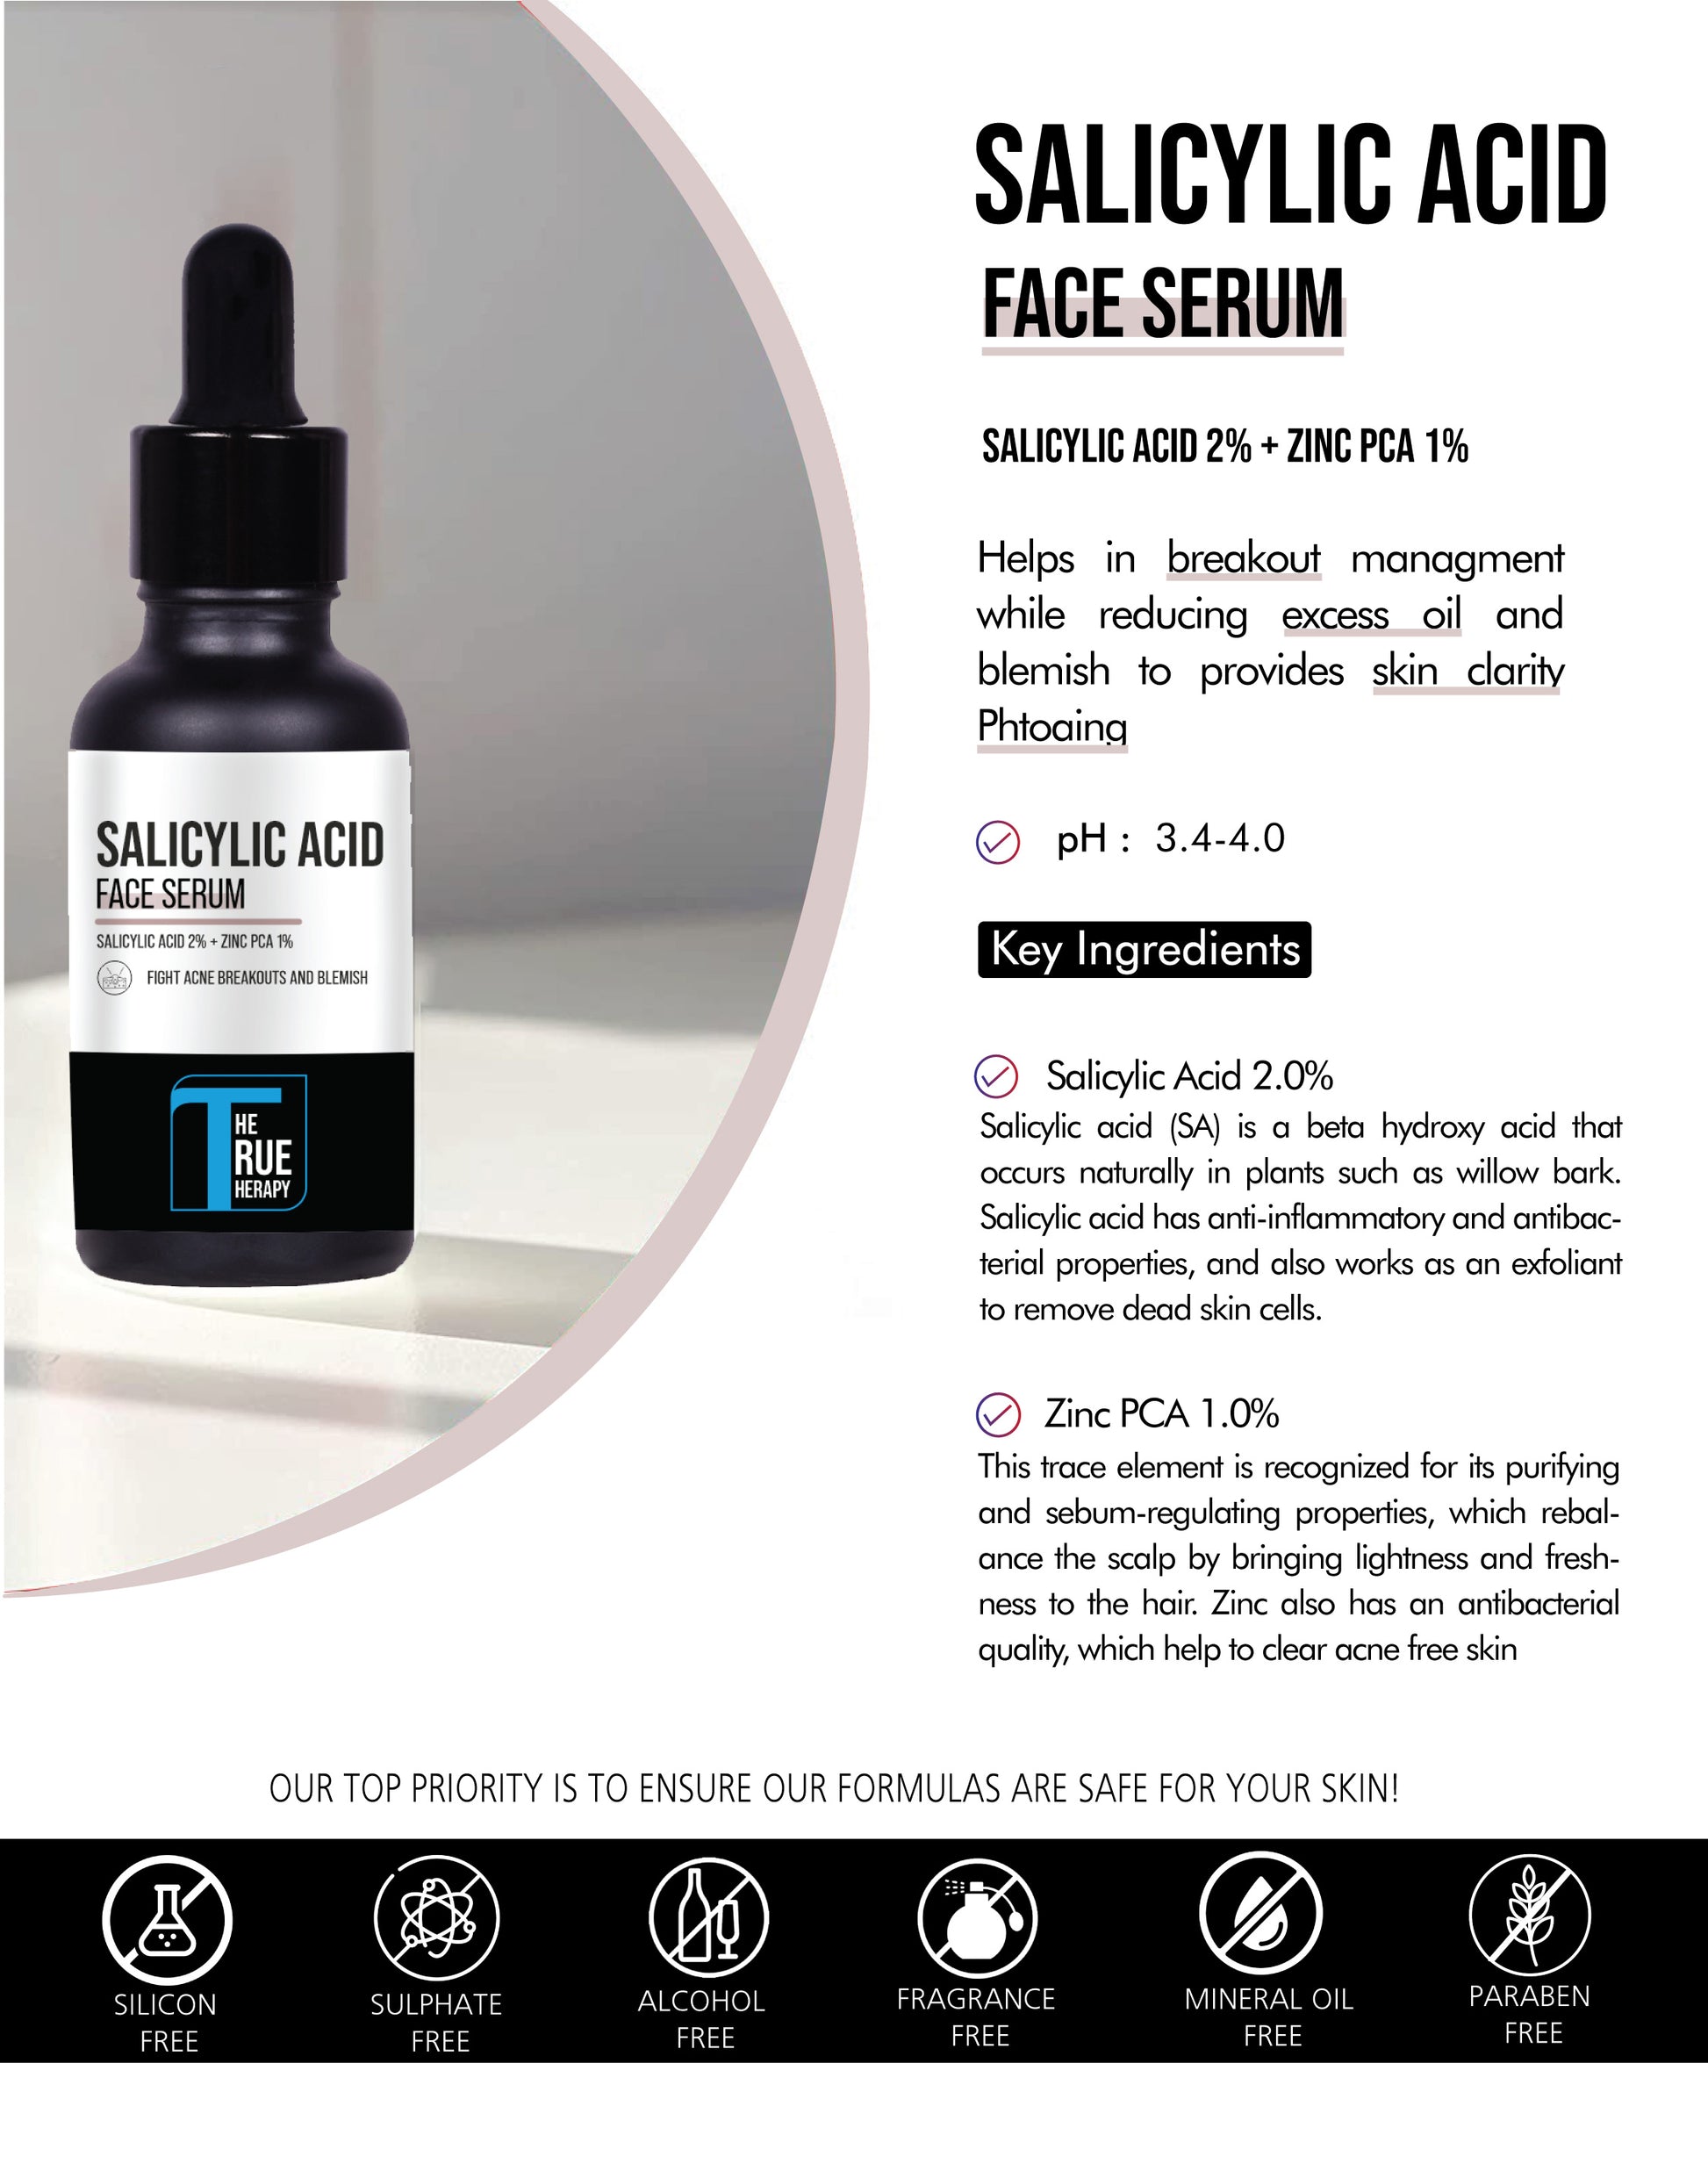 SALICYLIC ACID 2.0% + ZINC PCA - Face Serum - Key Ingrediants